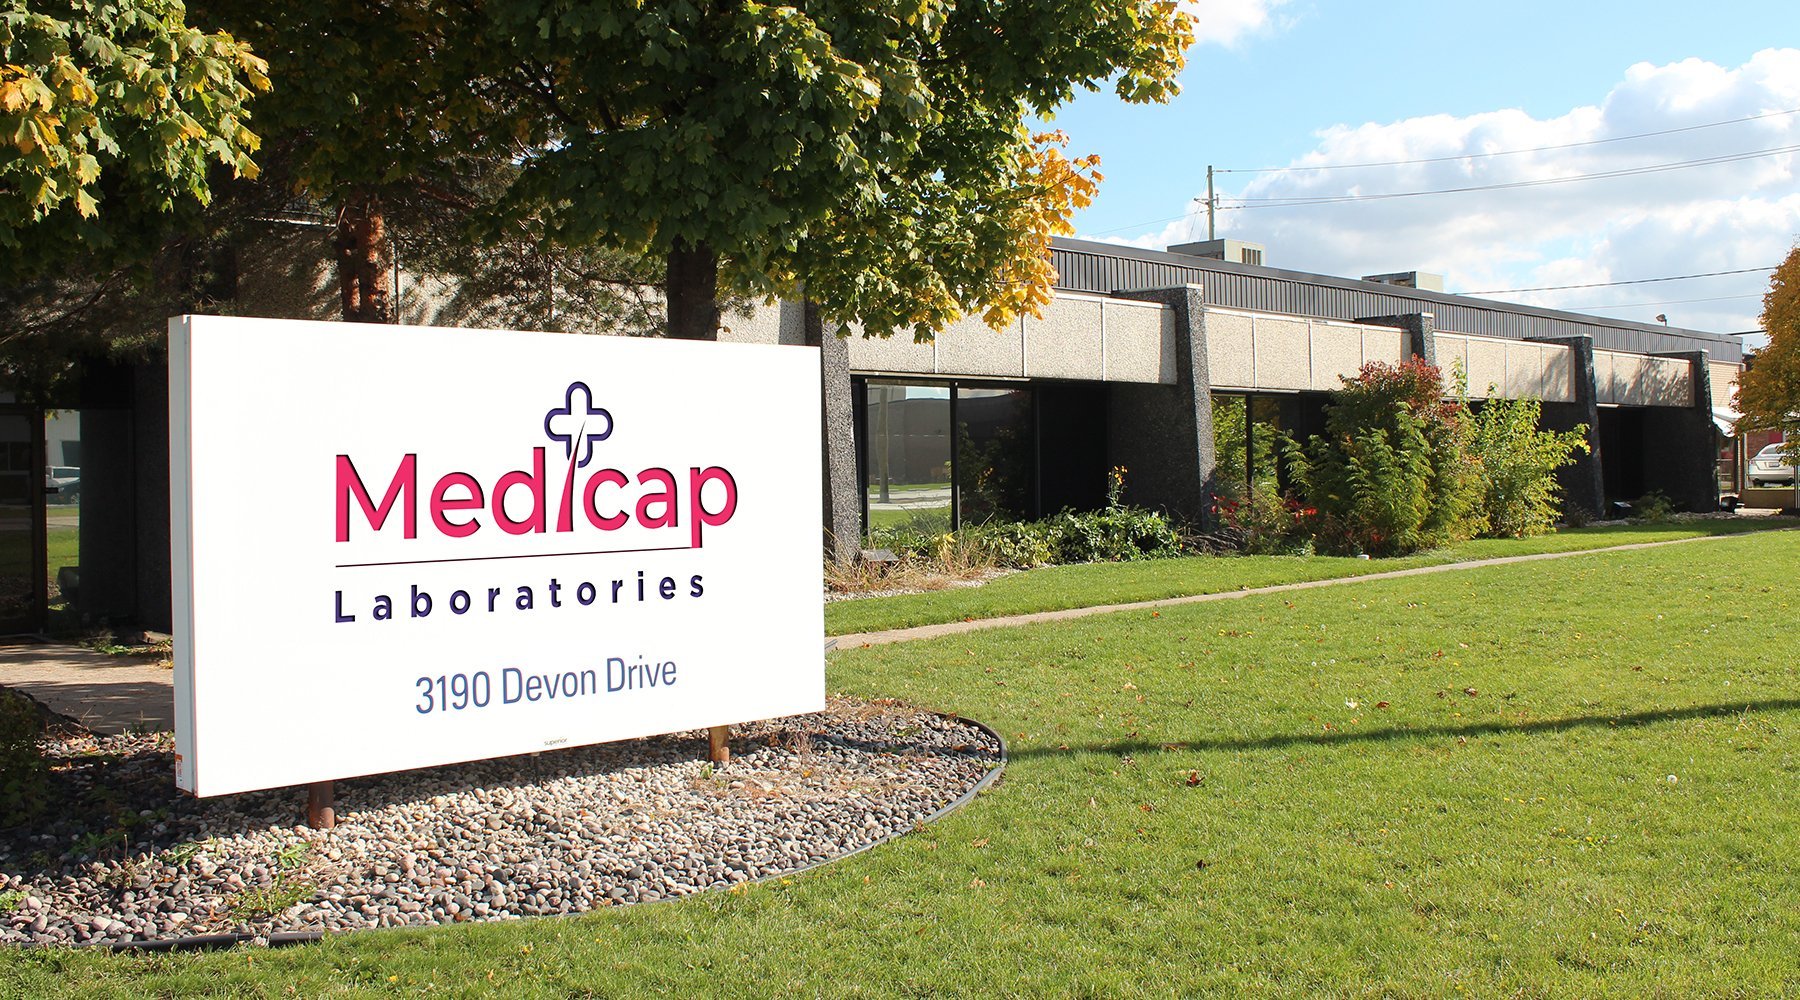 Medicap laboratories front image